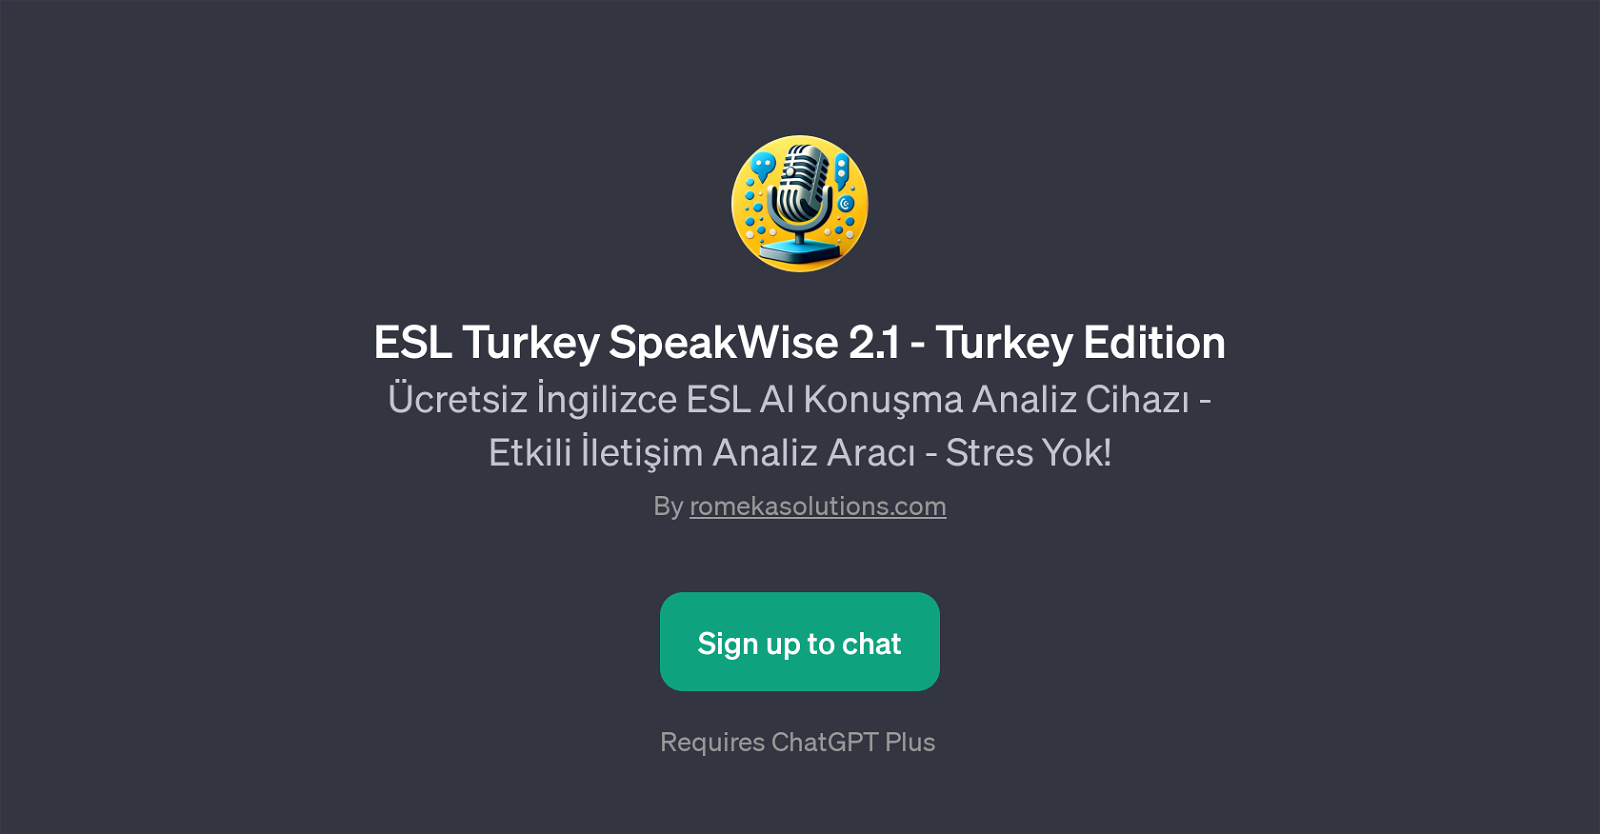 ESL Turkey SpeakWise 2.1 - Turkey Edition website